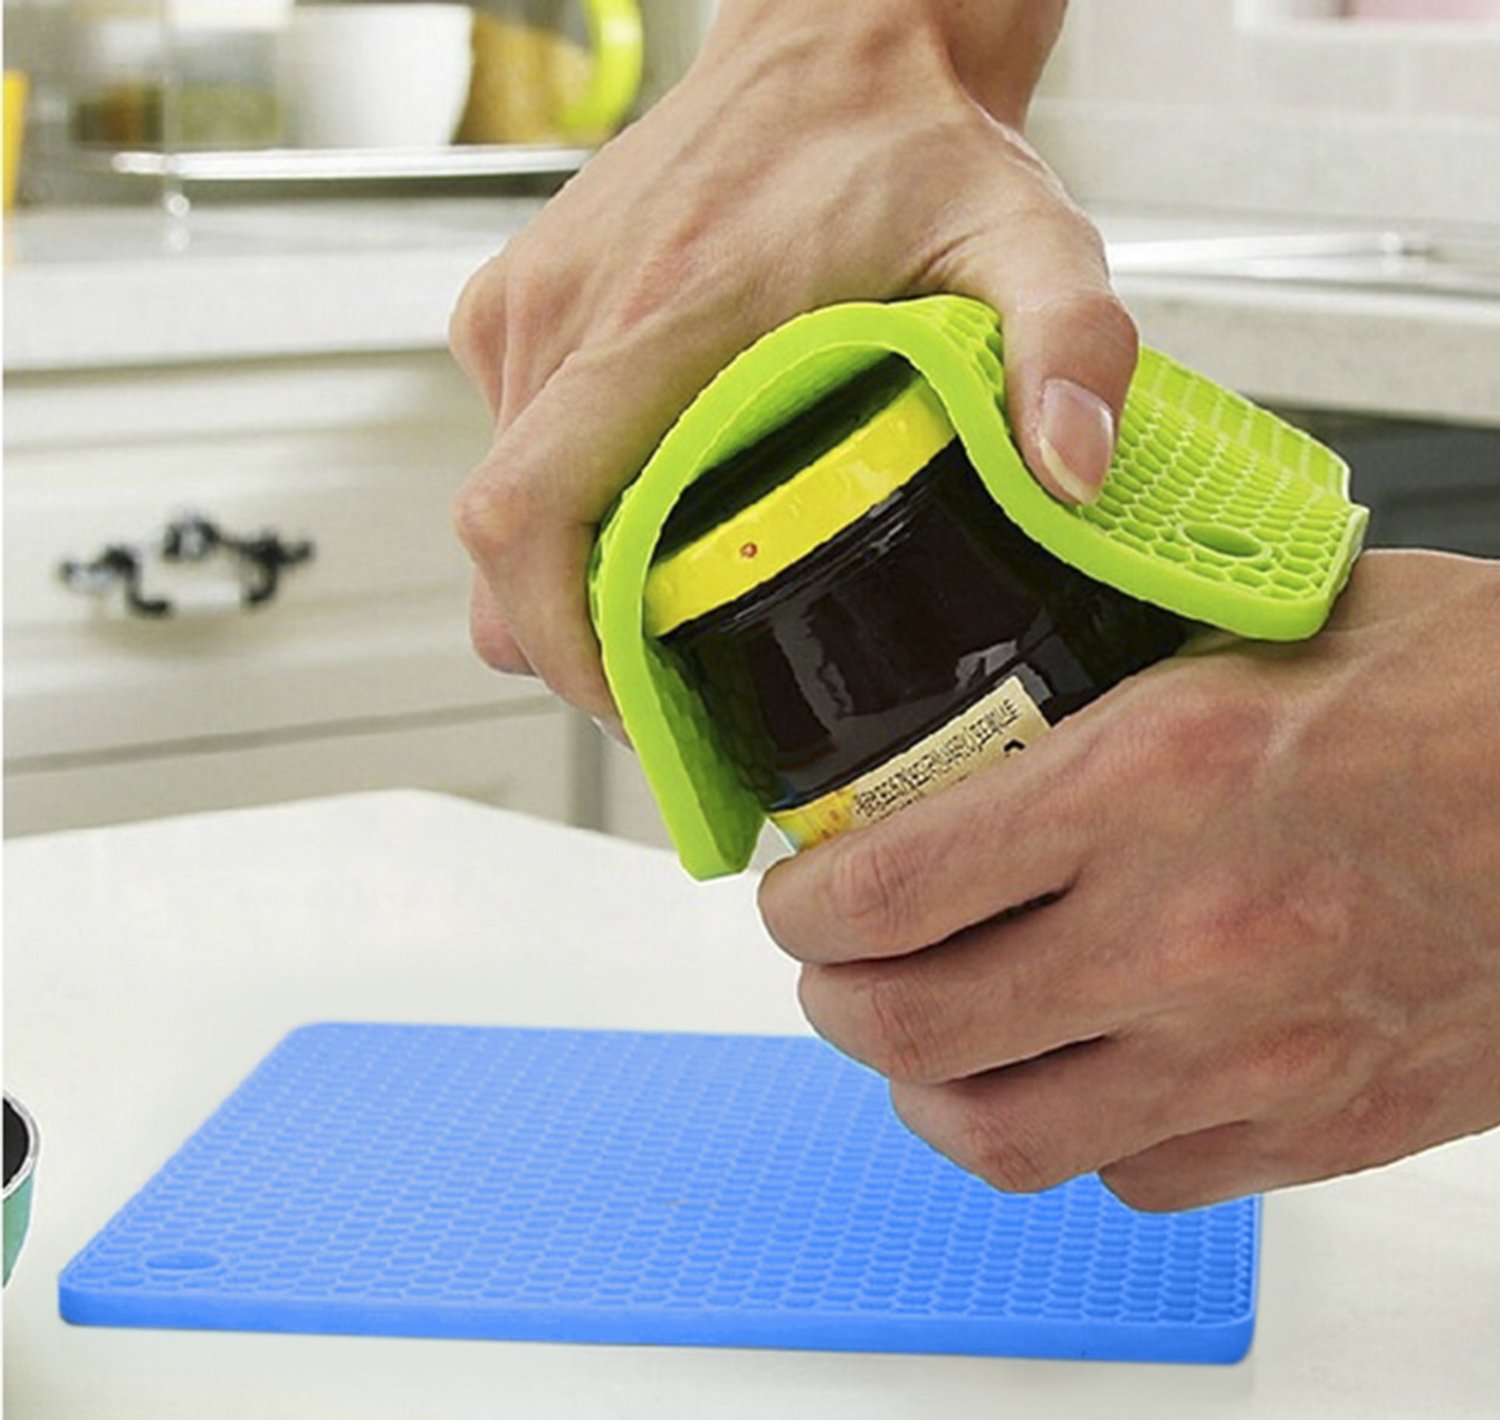 Coasters de silicone resistentes ao calor, Suportes de potenciômetros flexíveis de silicone, FDA Silicone Trivet Mat